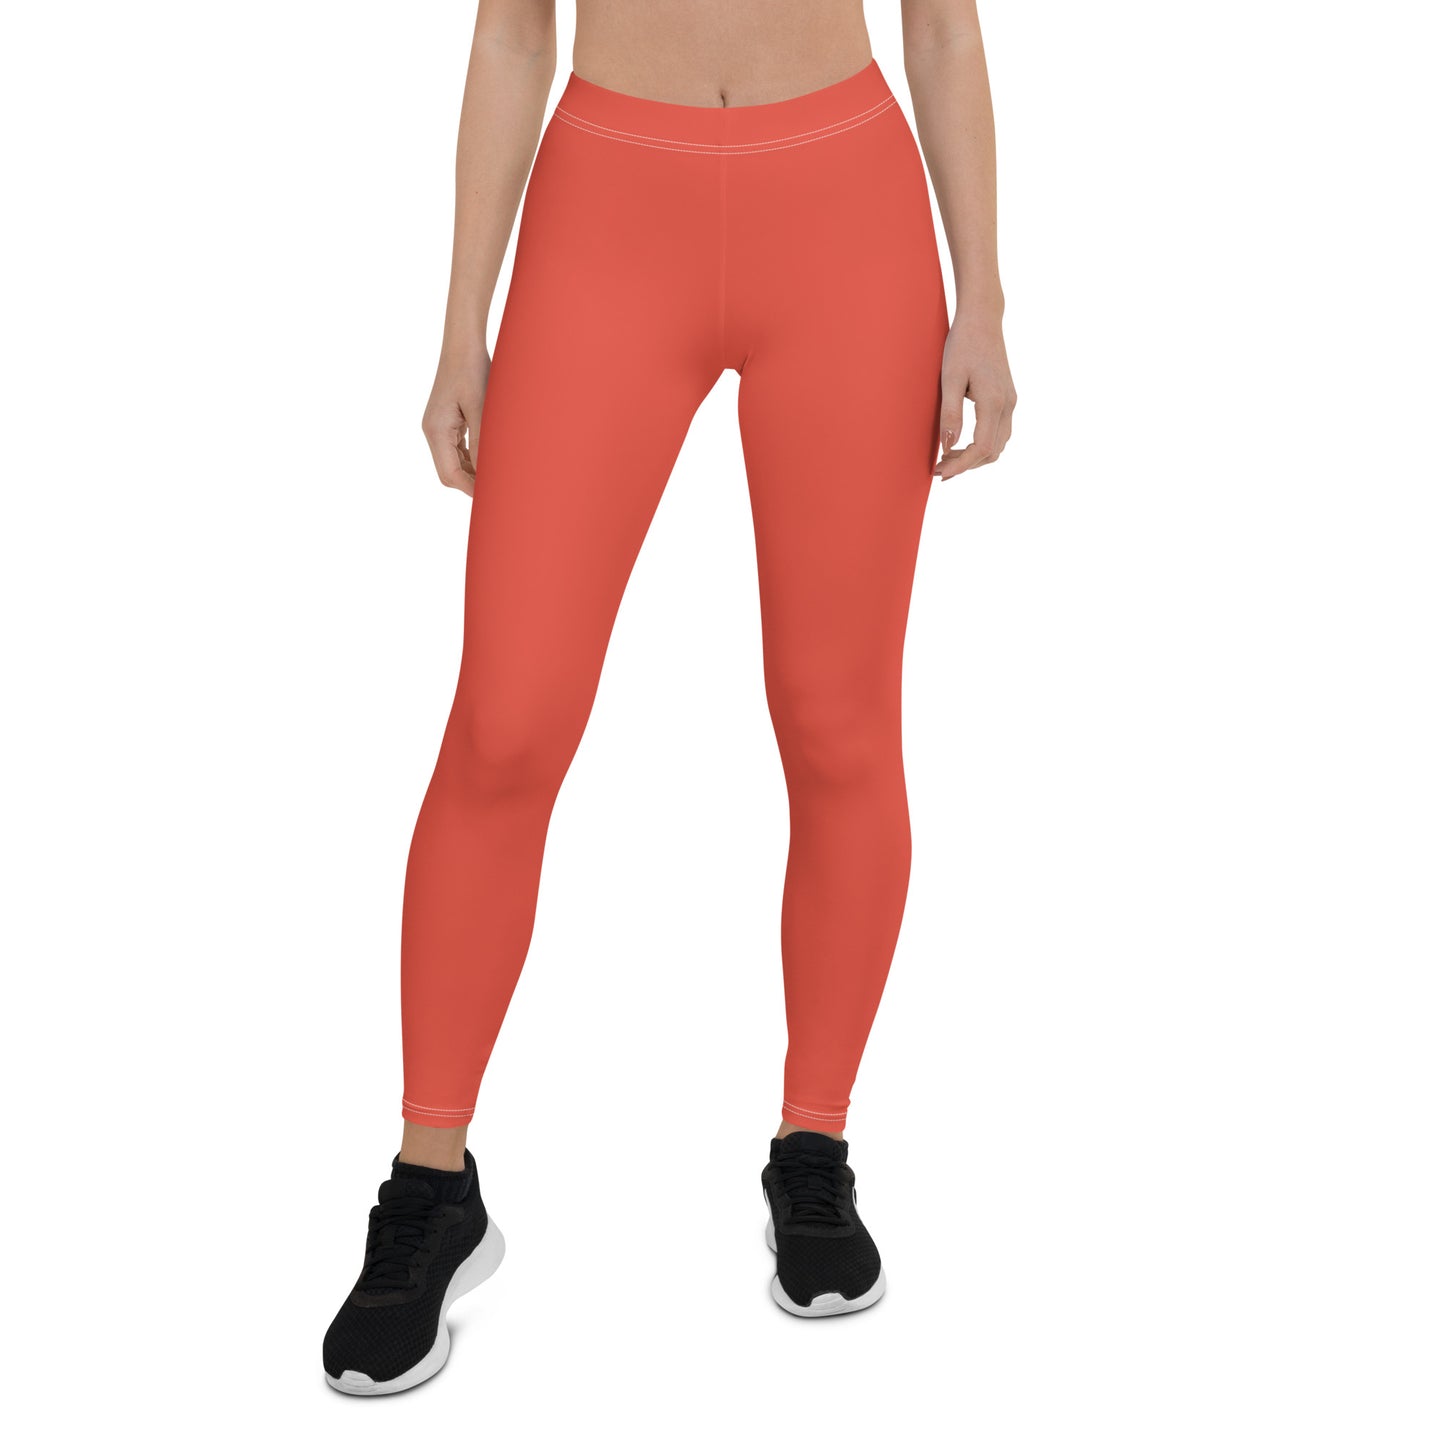 Humble Sportswear, women’s color match leggings, spandex workout leggings